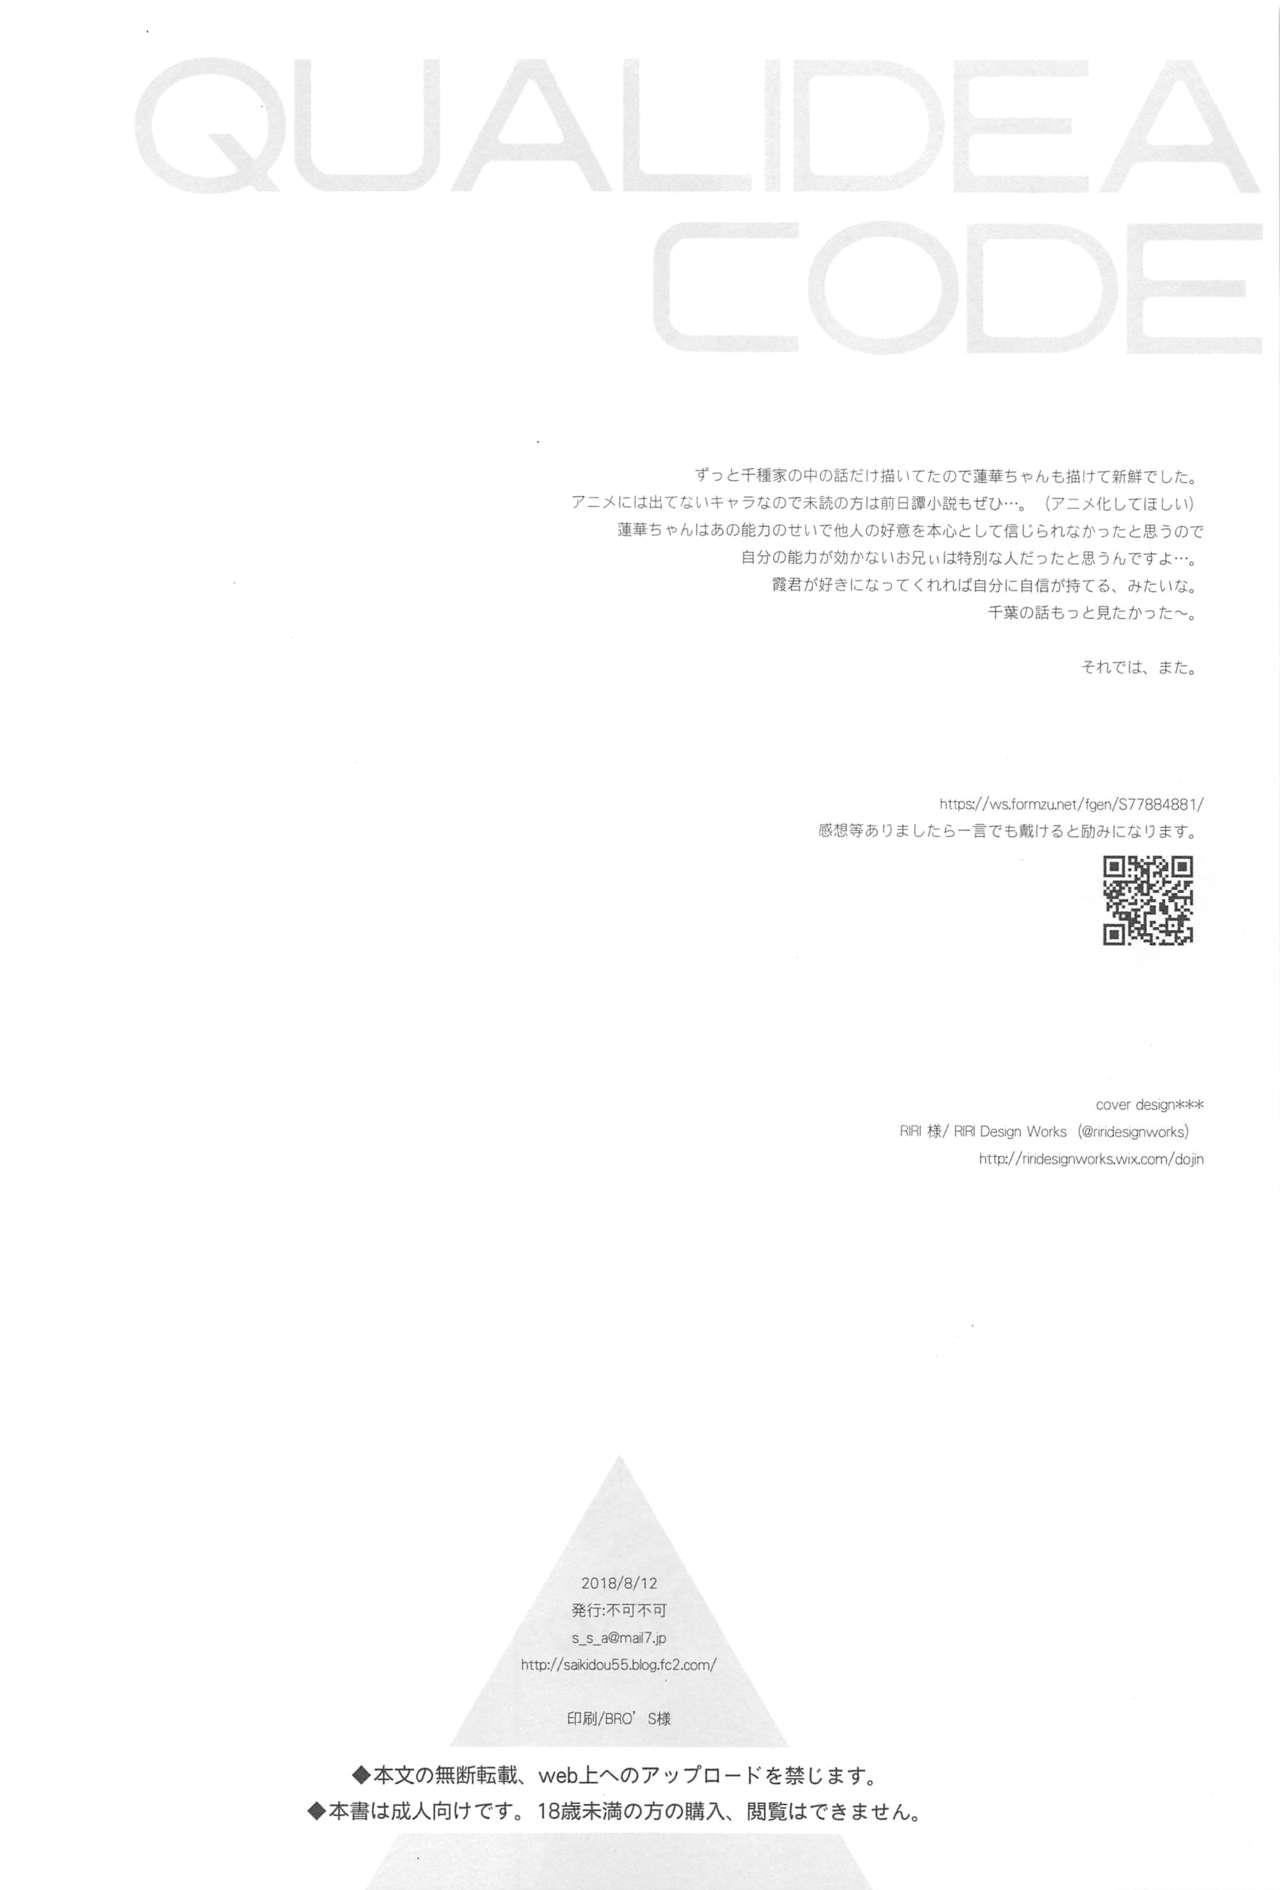 Amante Kono Sekai no Owari made - Qualidea code Teamskeet - Page 49